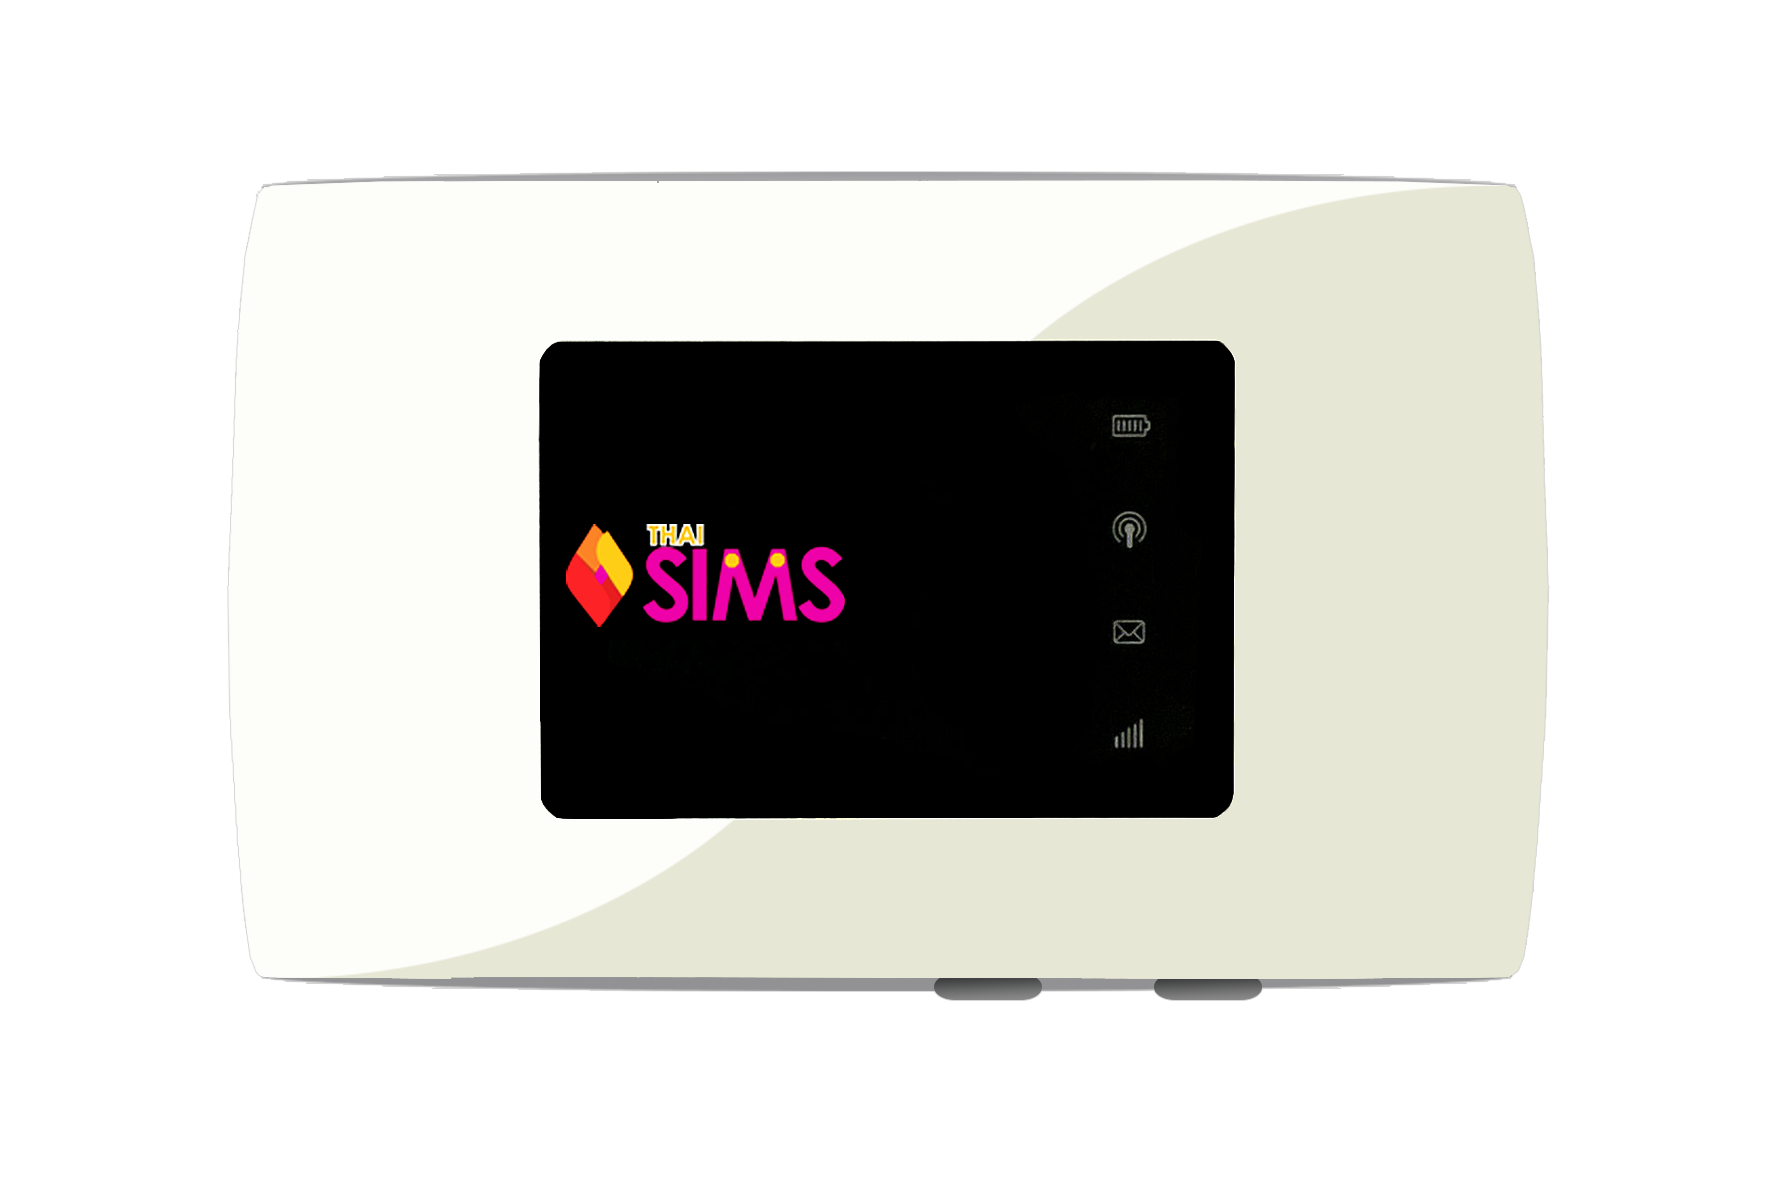 ThaiSims 4G Pocket WiFi Rental - Online Reservation